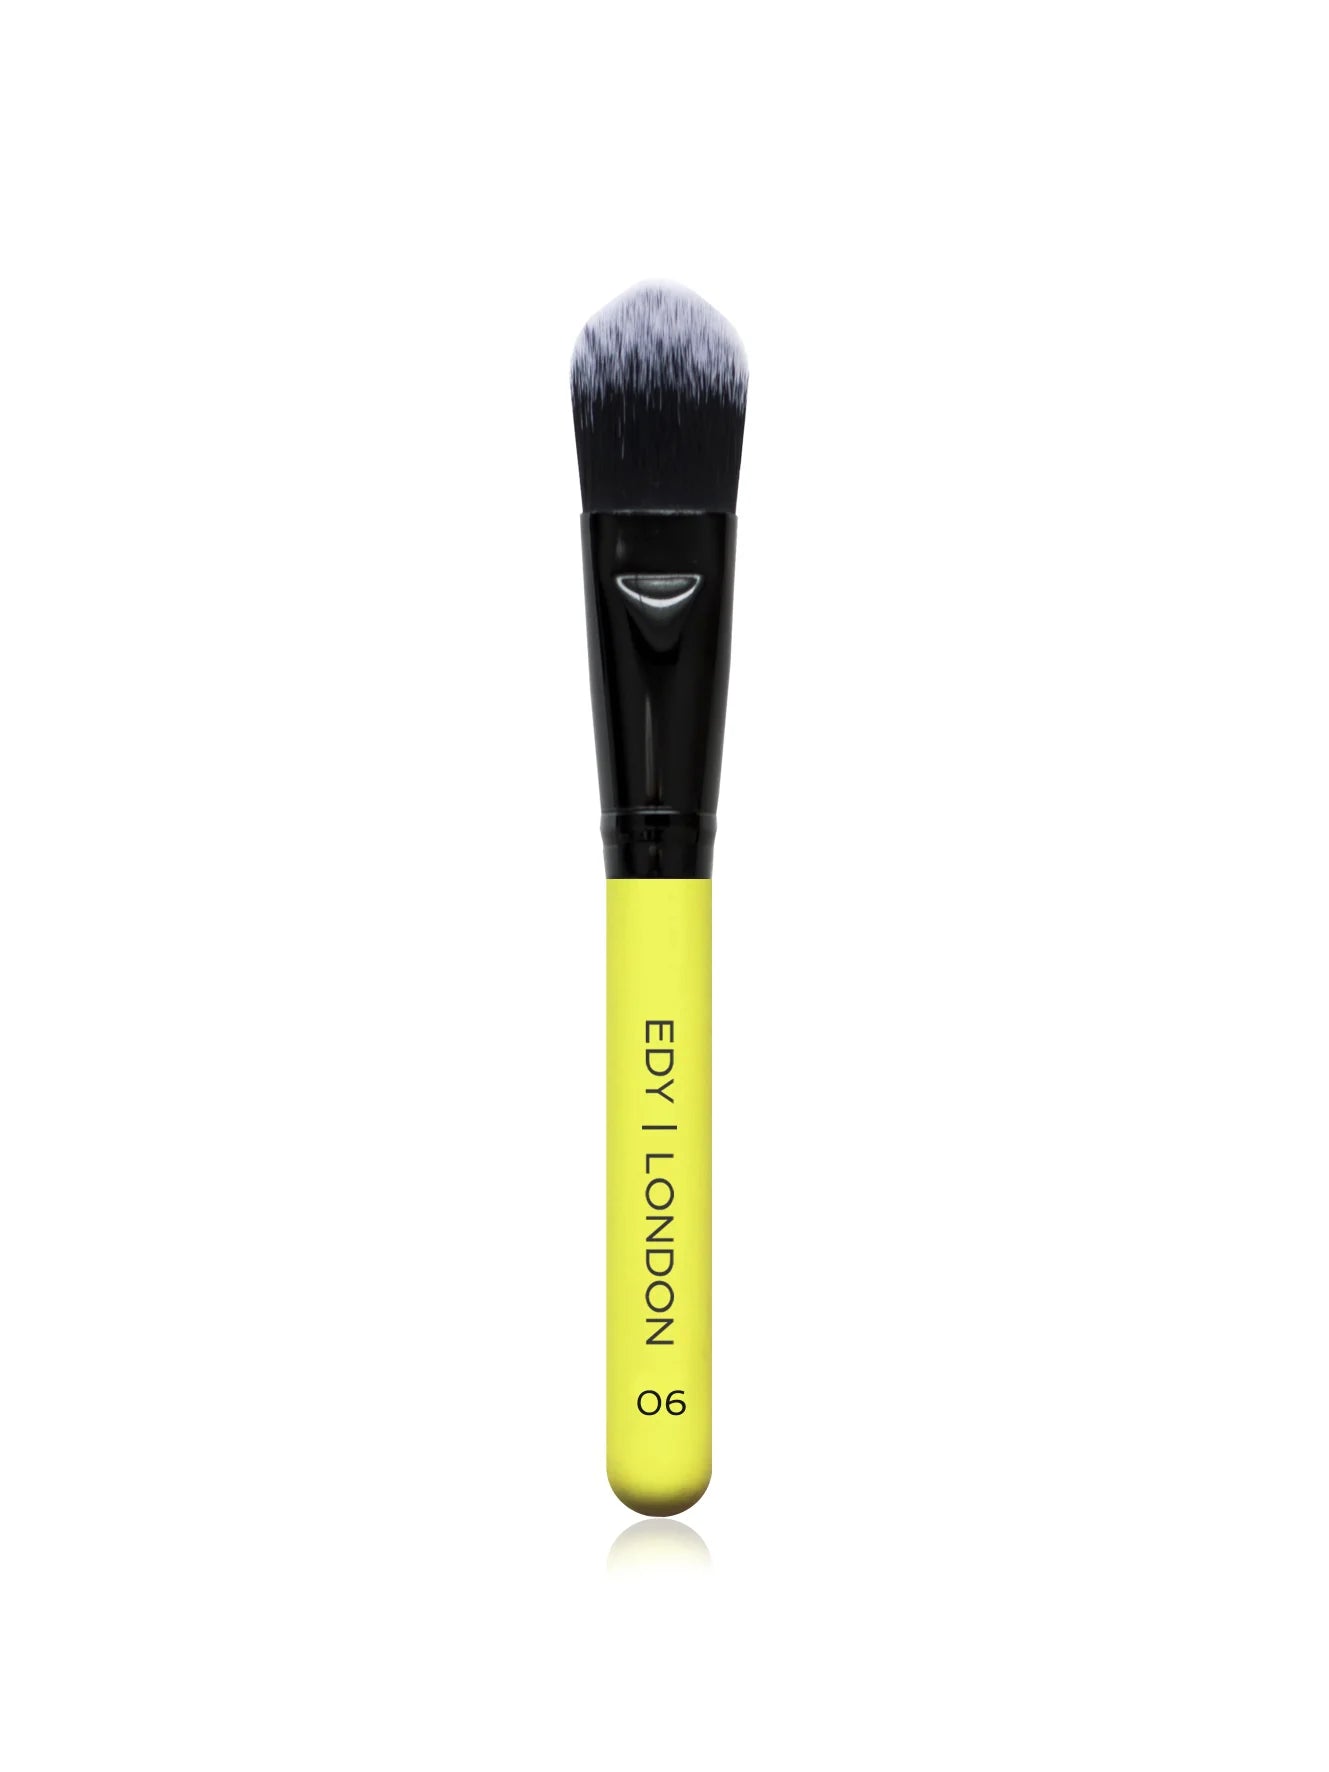 Tapered Oval Foundation Brush 06 Make-up Brush EDY LONDON Lemon   - EDY LONDON PRODUCTS UK - The Best Makeup Brushes - shop.edy.london